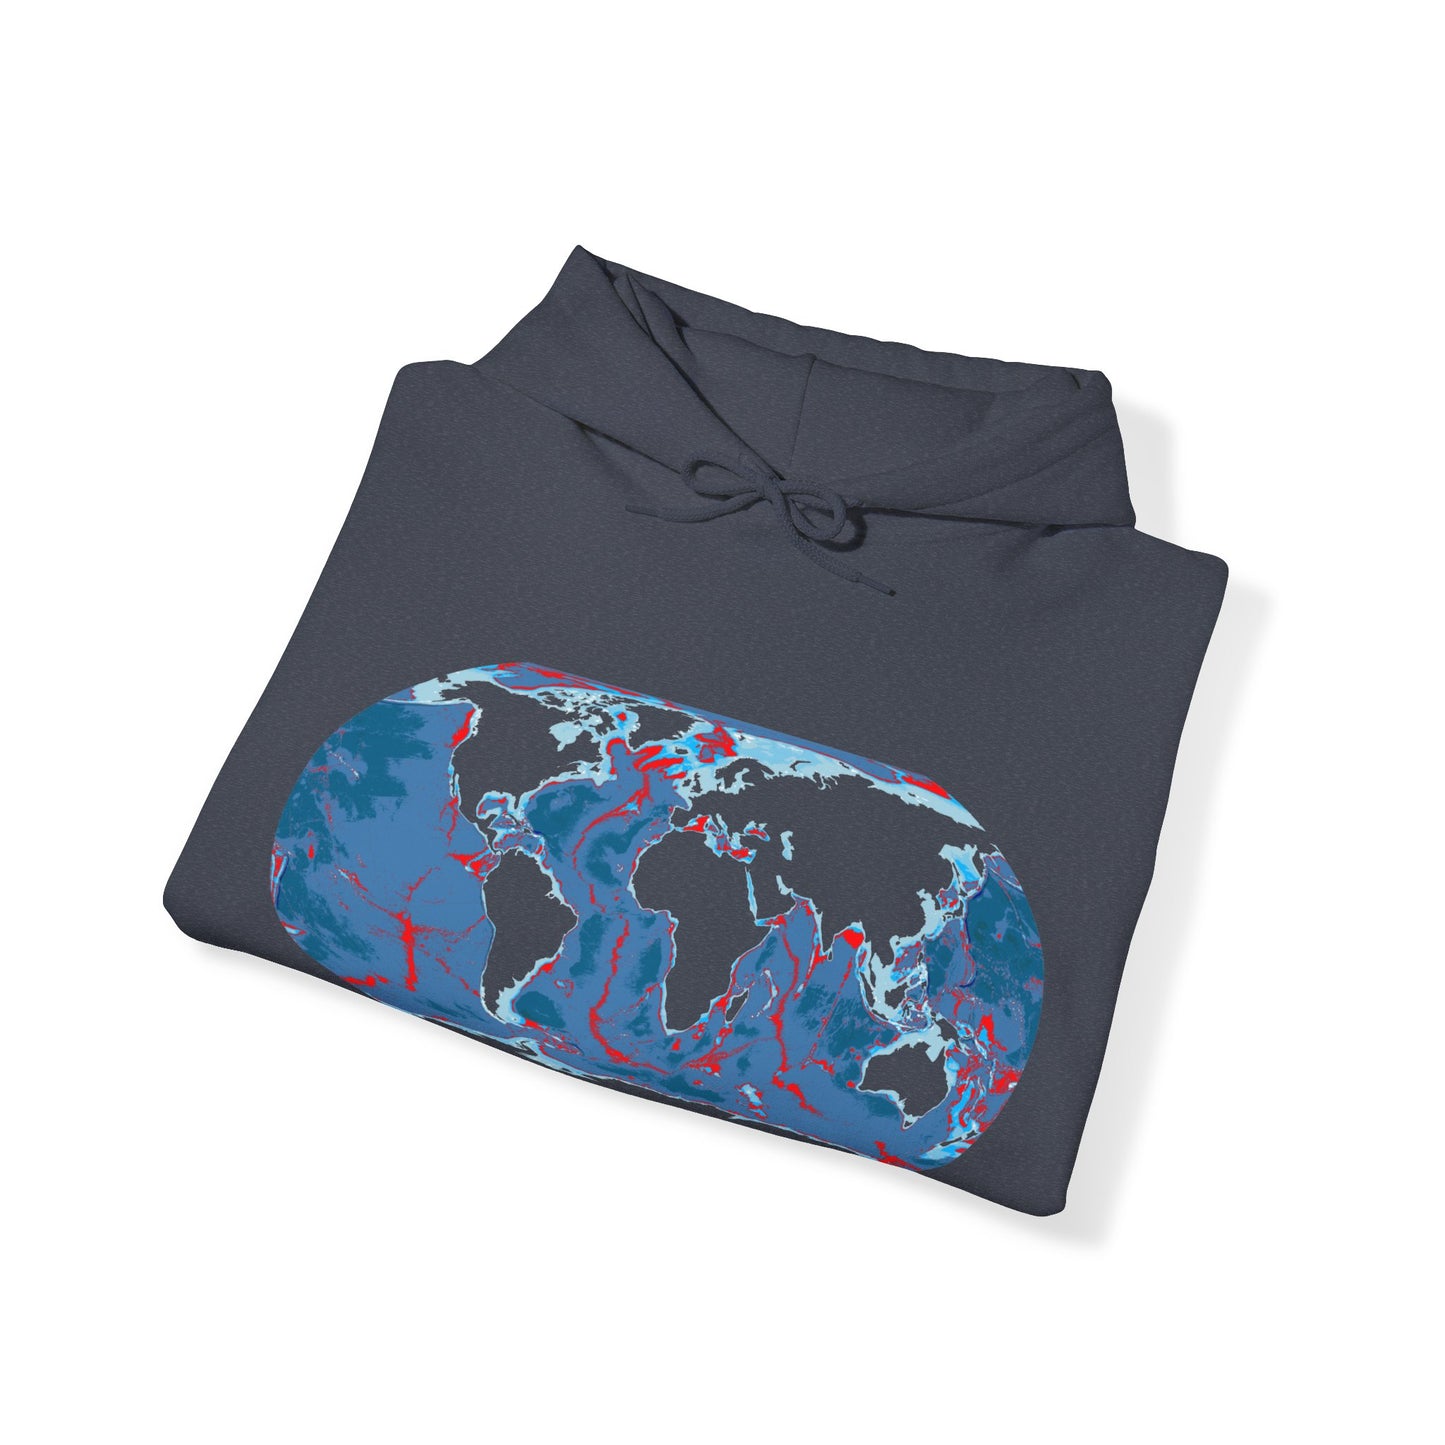 Ocean Trench Unisex Heavy Blend™ Hooded Sweatshirt